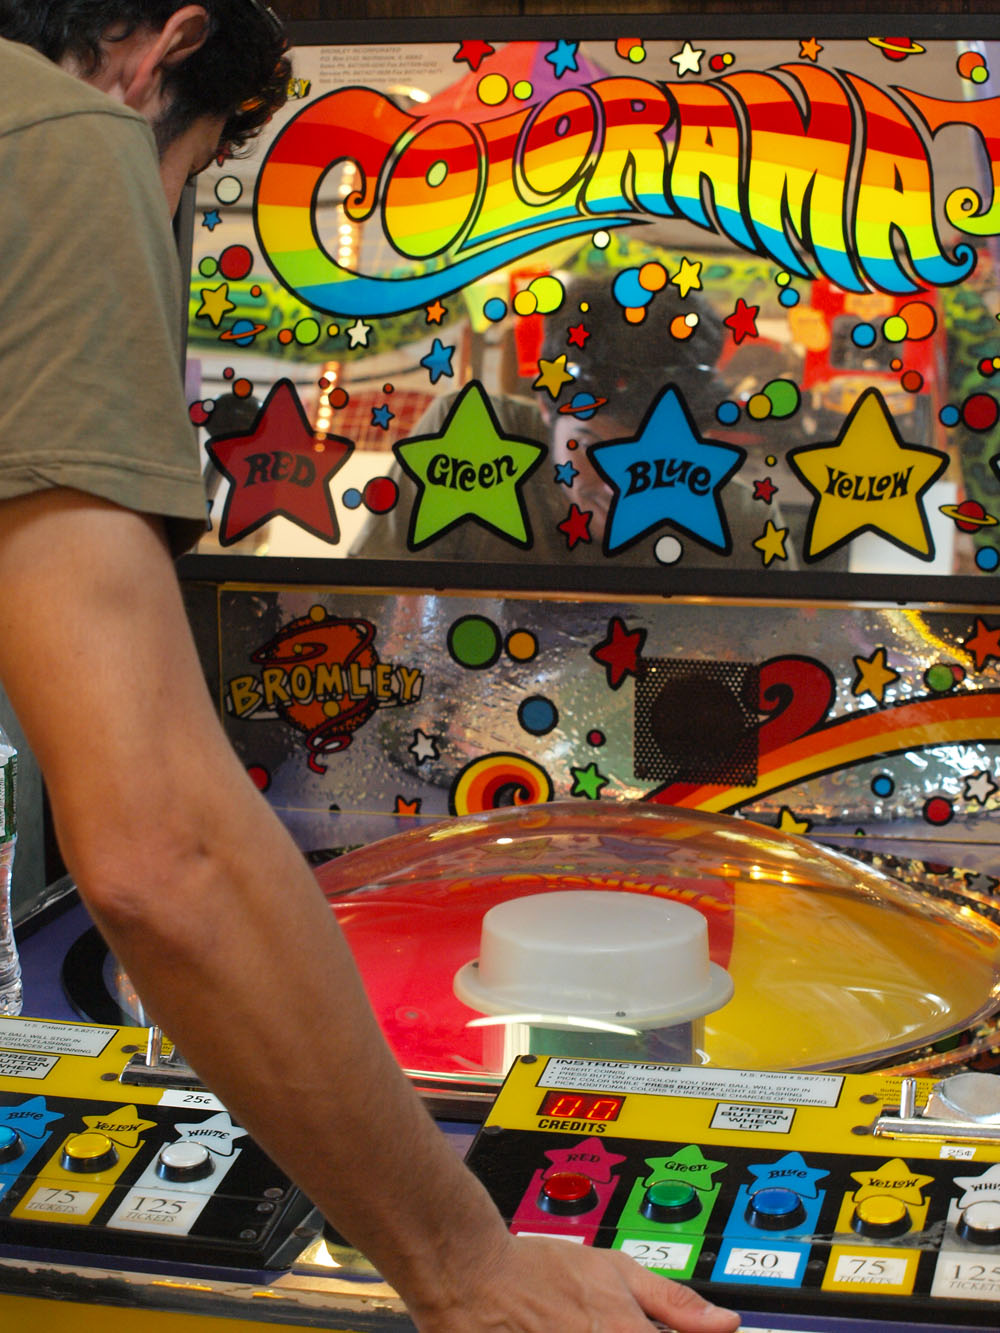 Colorama retro arcade game, Atlantic City